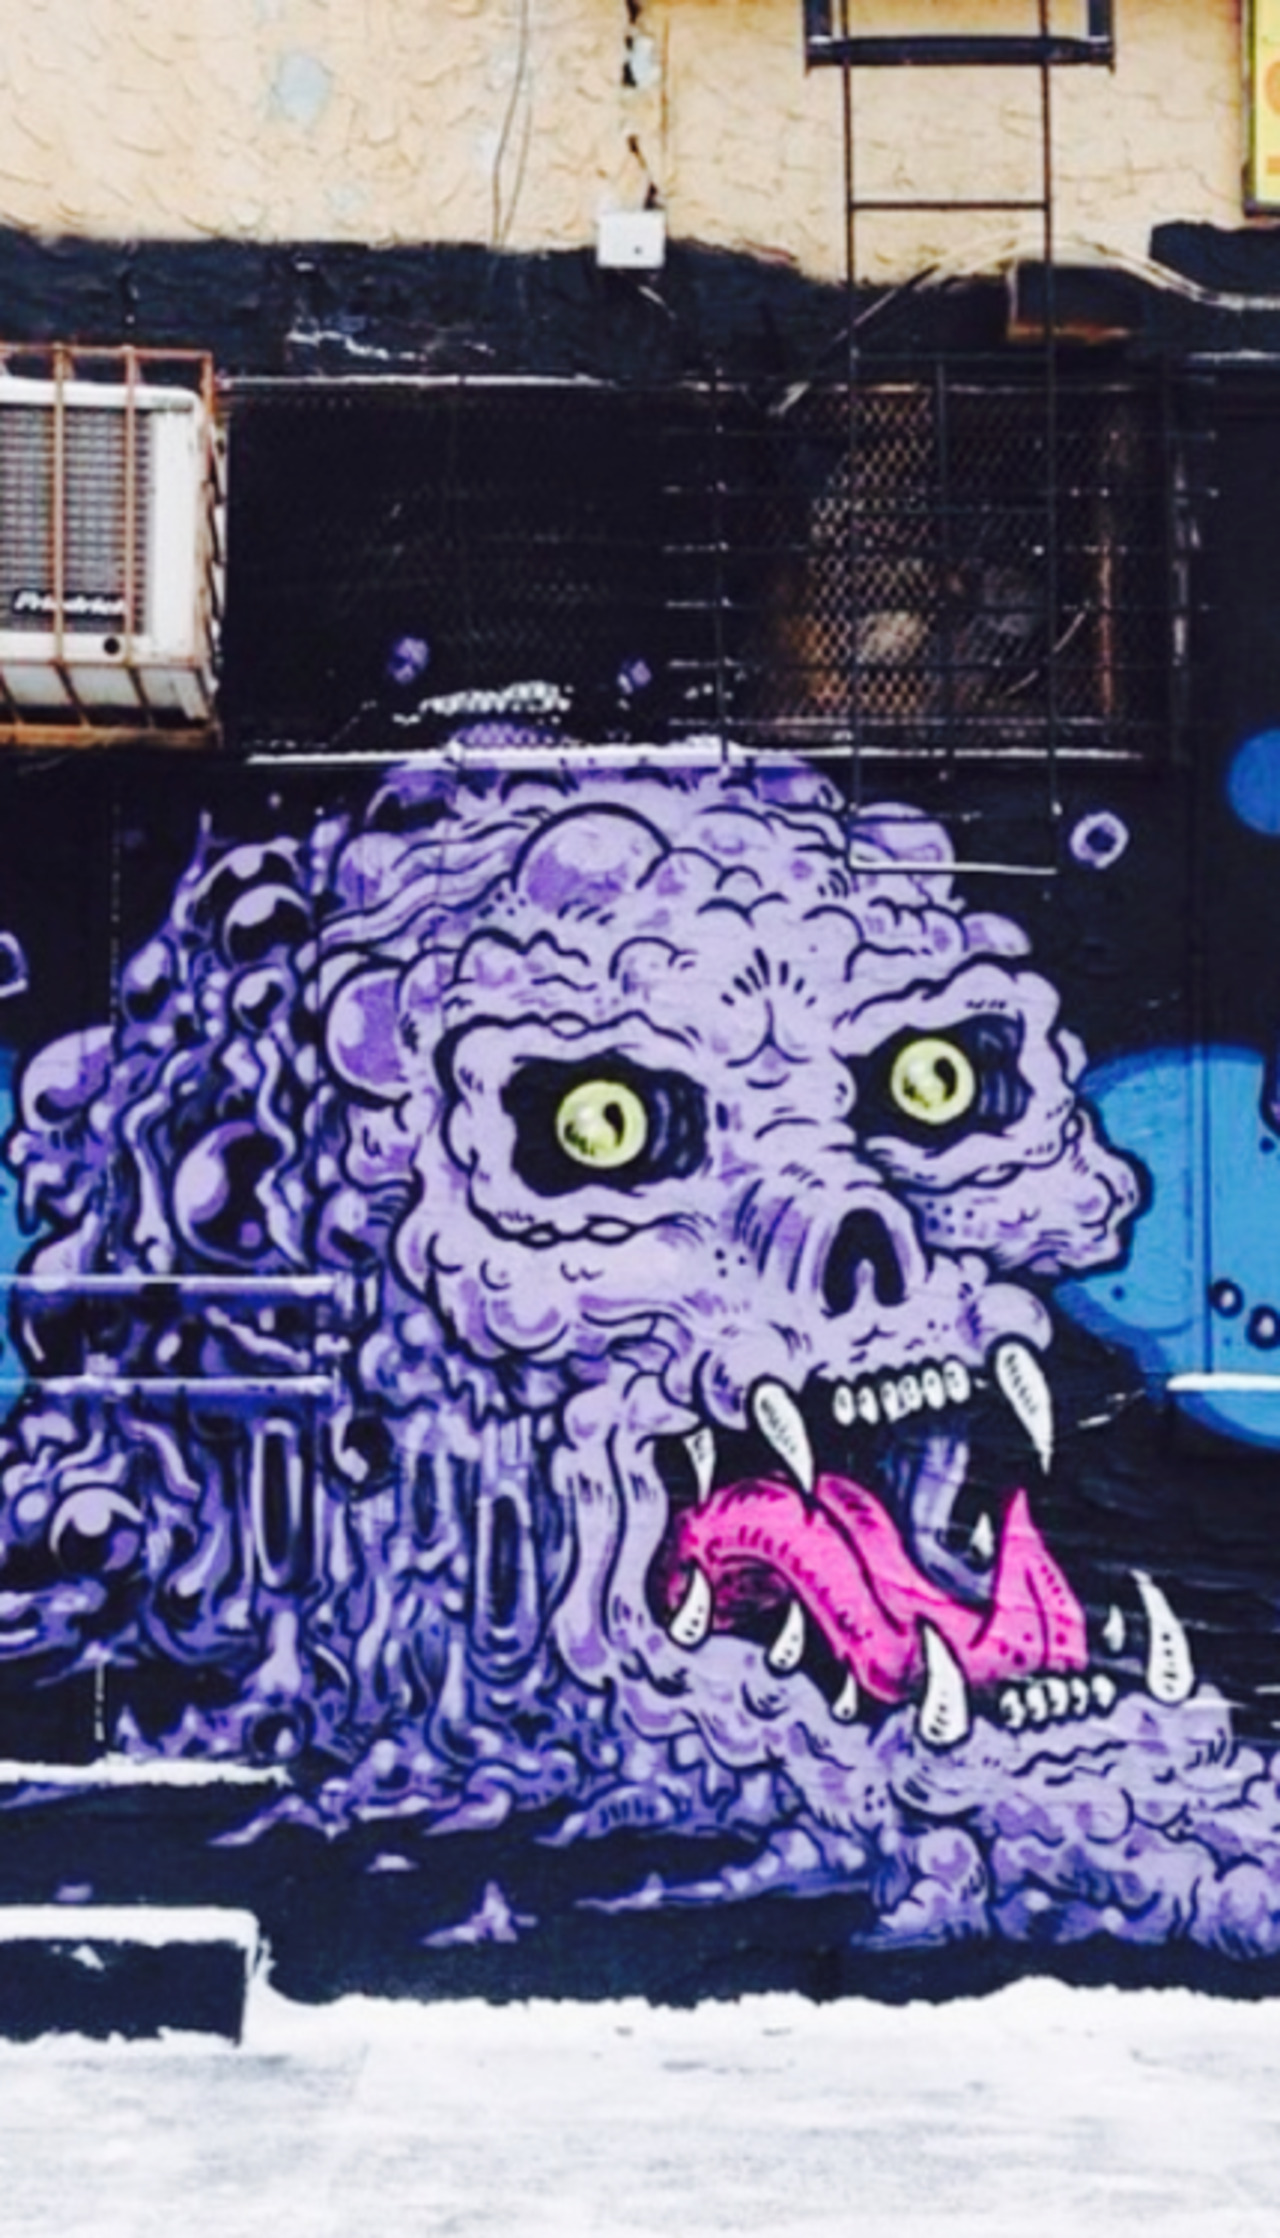 Photo - #Graffiti #Mural #Murales #StreetArt - #ZangArt #Showcase - http://bit.ly/1ALWZqt http://t.co/0EaVj3fHEs